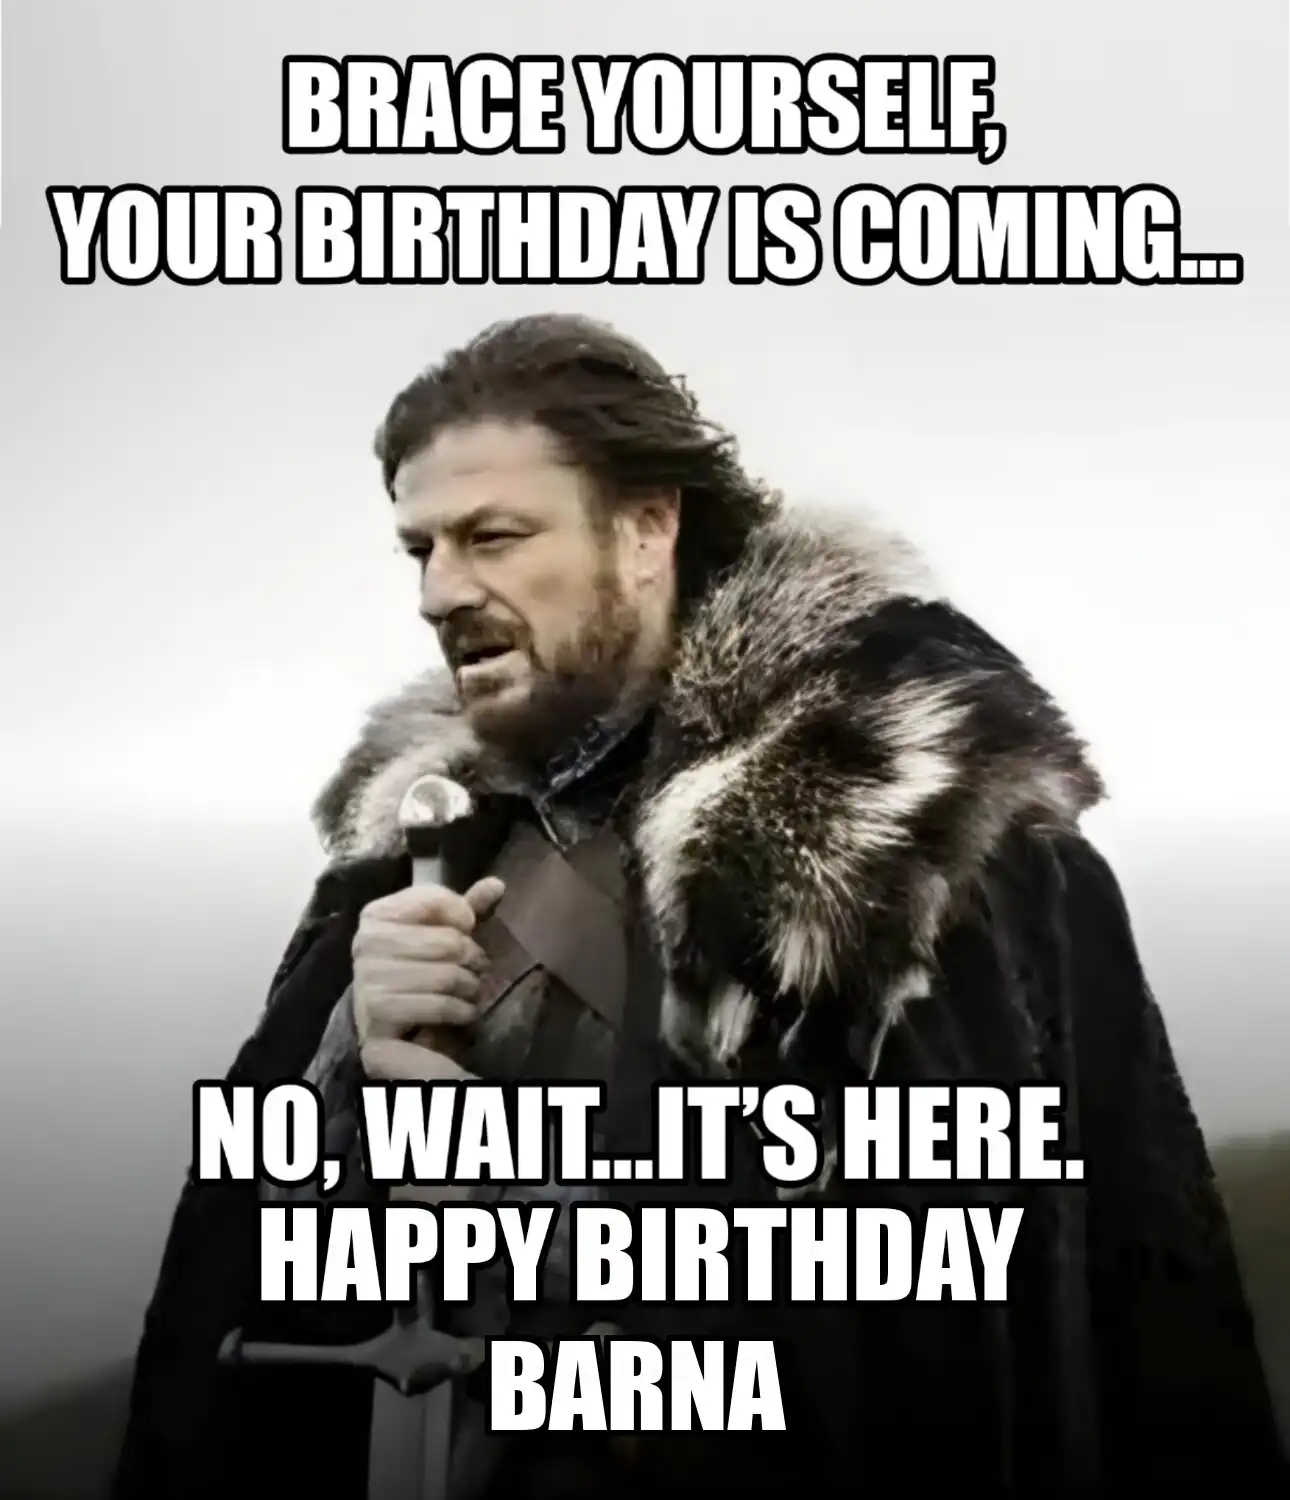 Happy Birthday Barna Brace Yourself Your Birthday Is Coming Meme